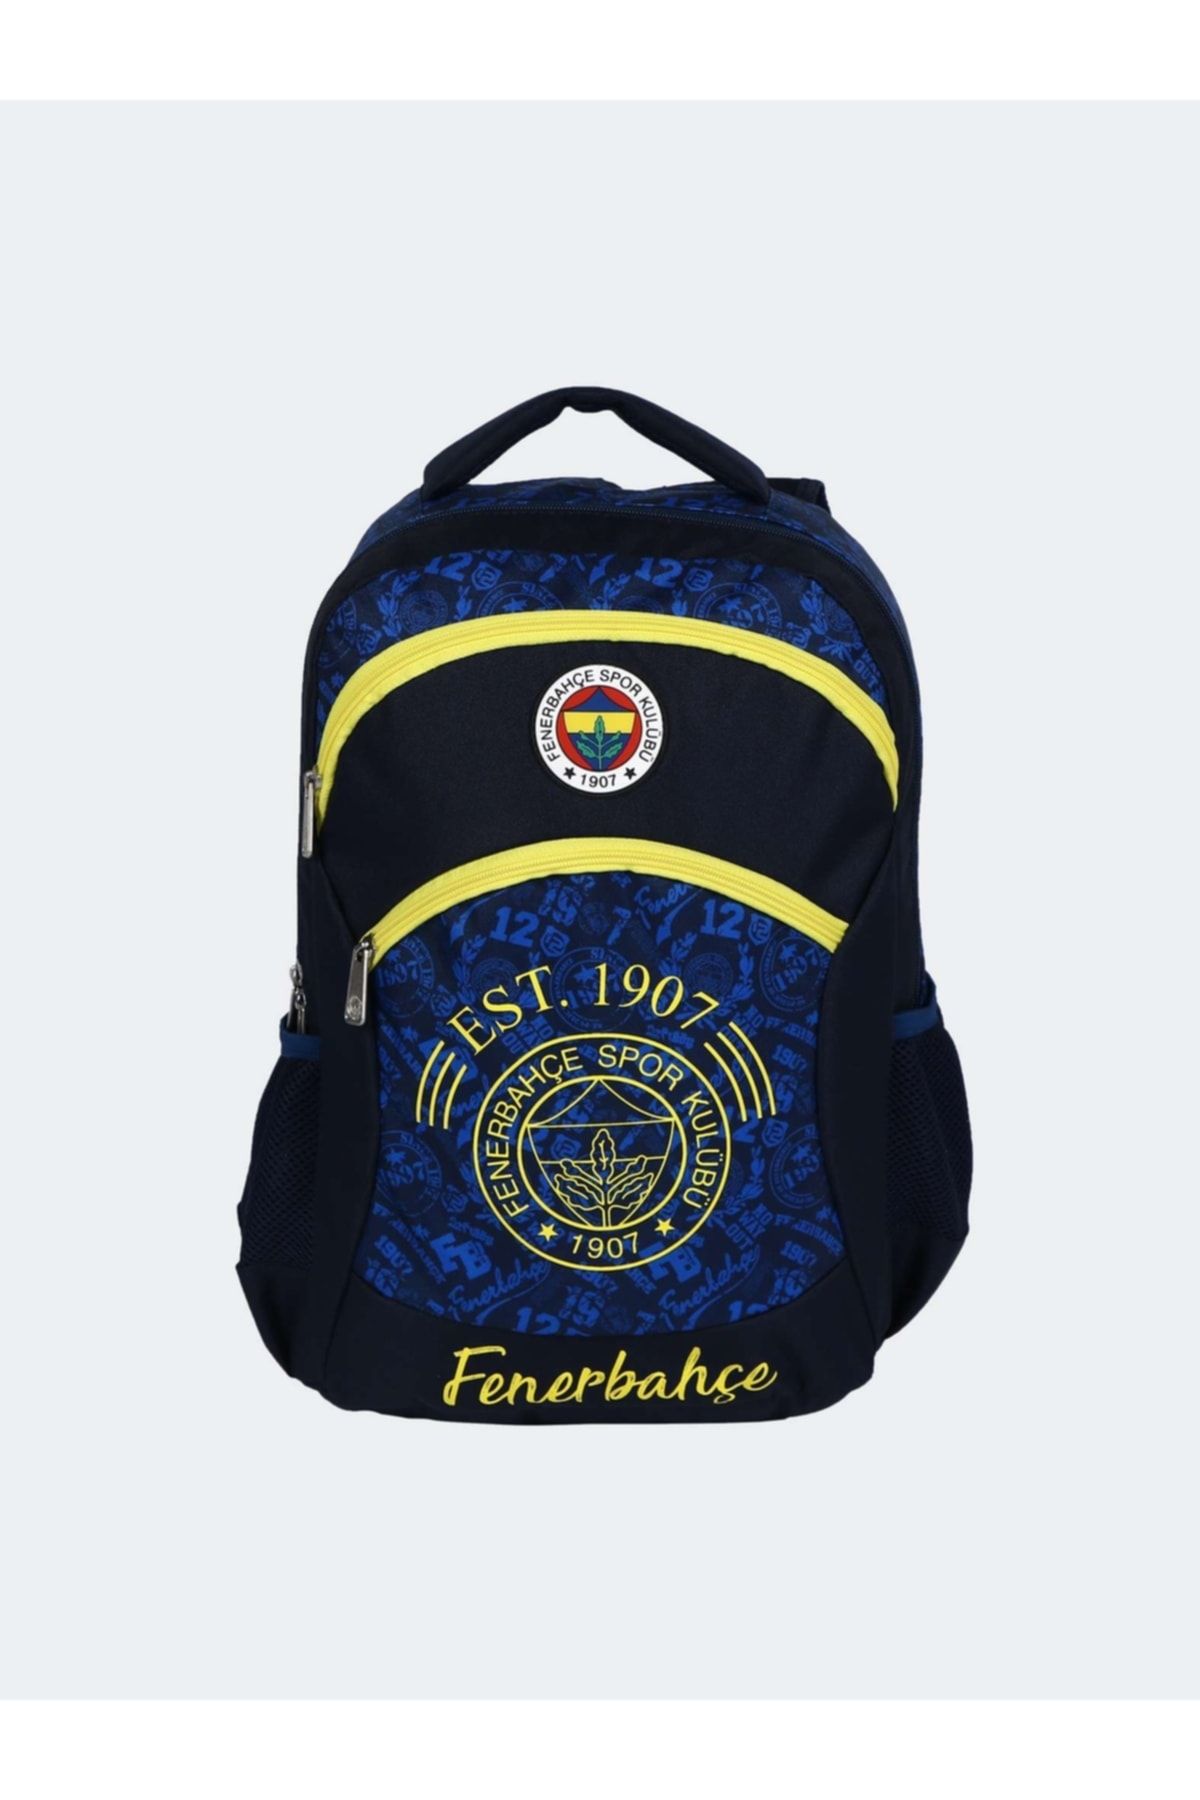 Fenerbahçe Fb Sırt Cantası Est 1907 Rubber Arm L